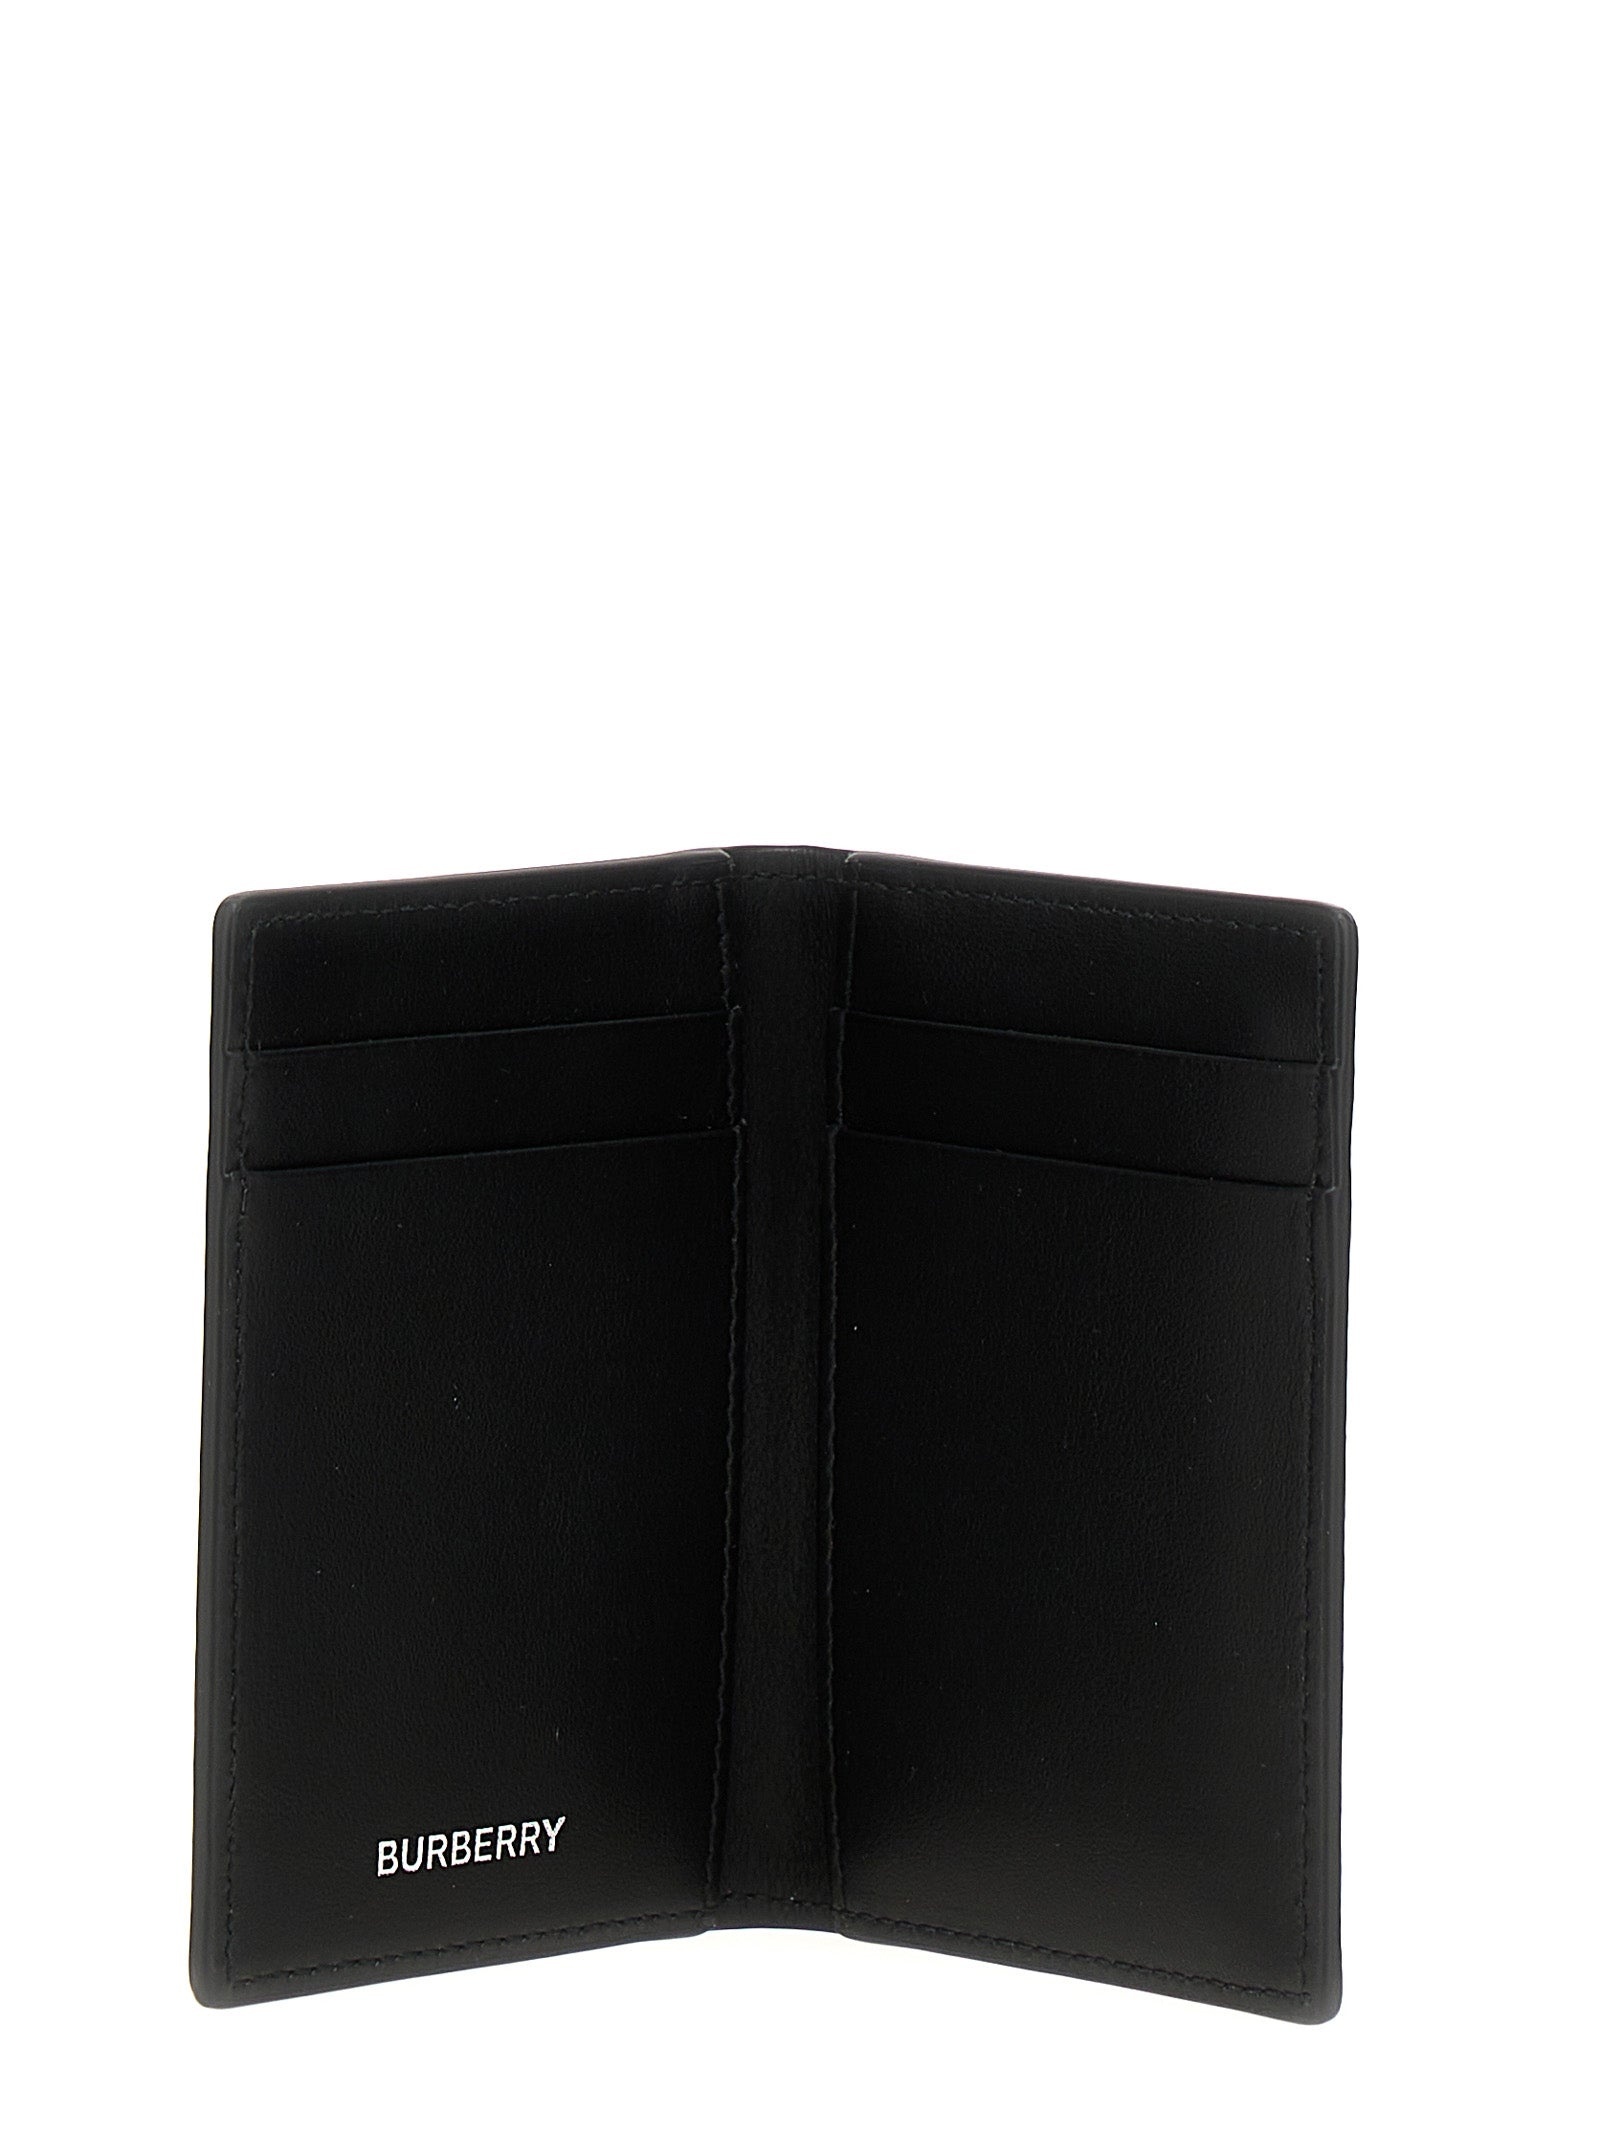 Burberry Check Card Holder - 3